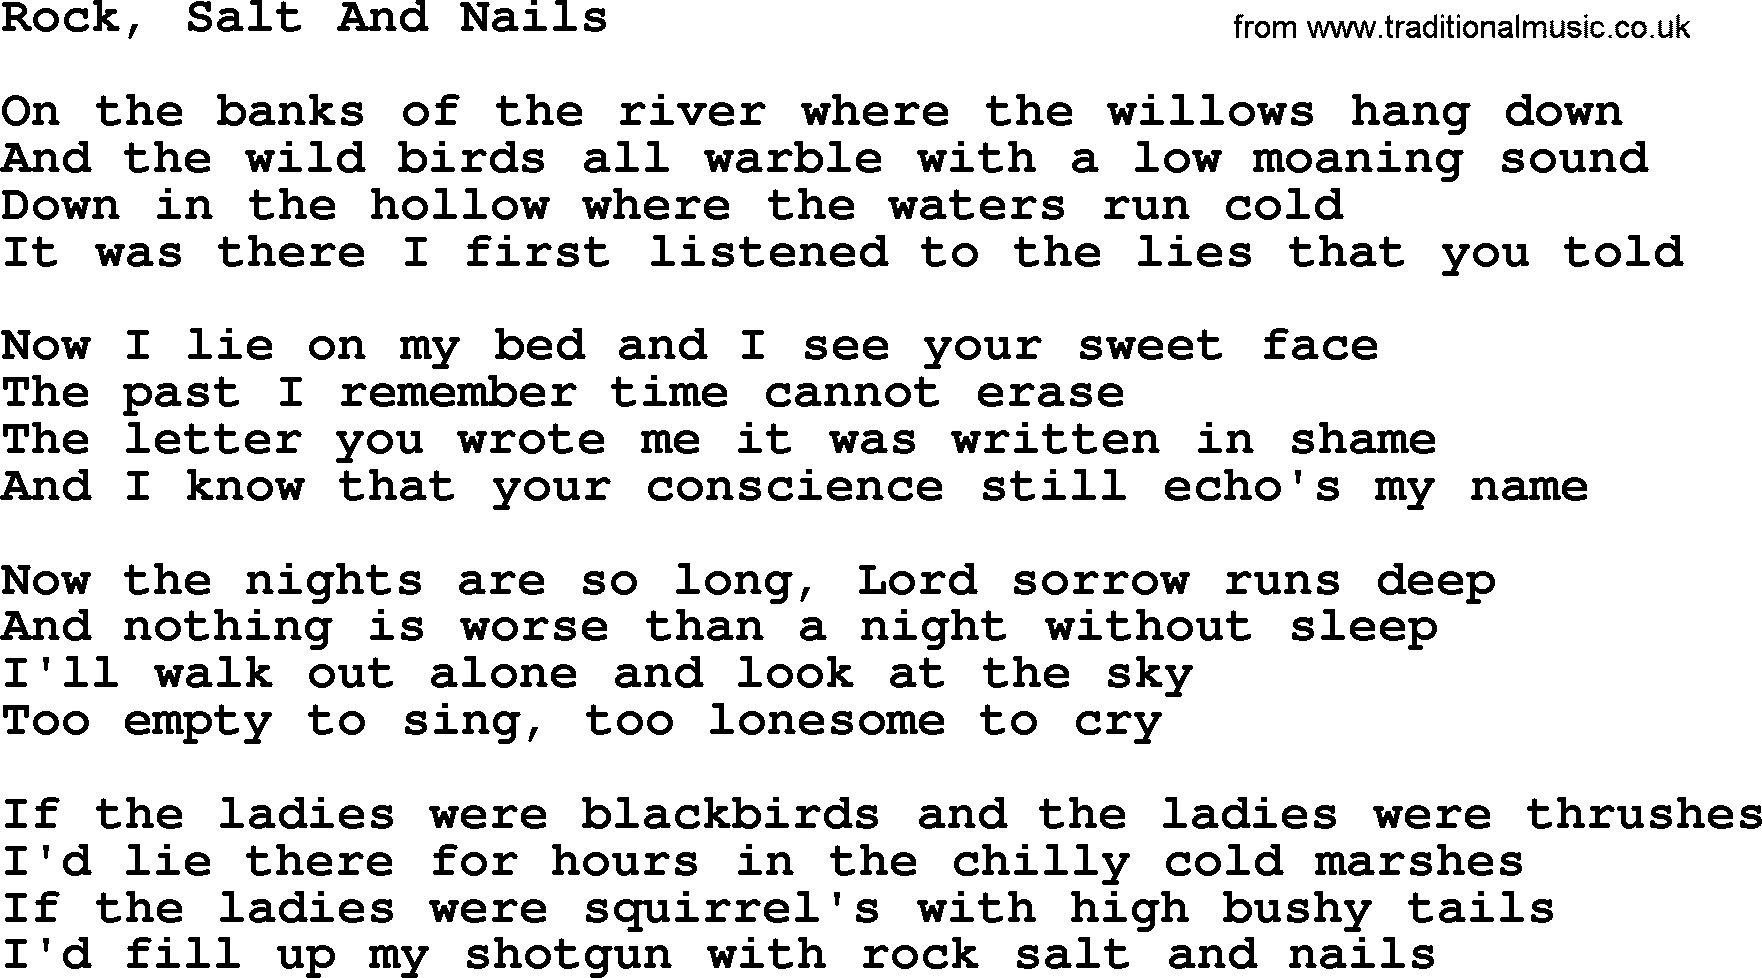 Joan Baez song Rock, Salt And Nails, lyrics